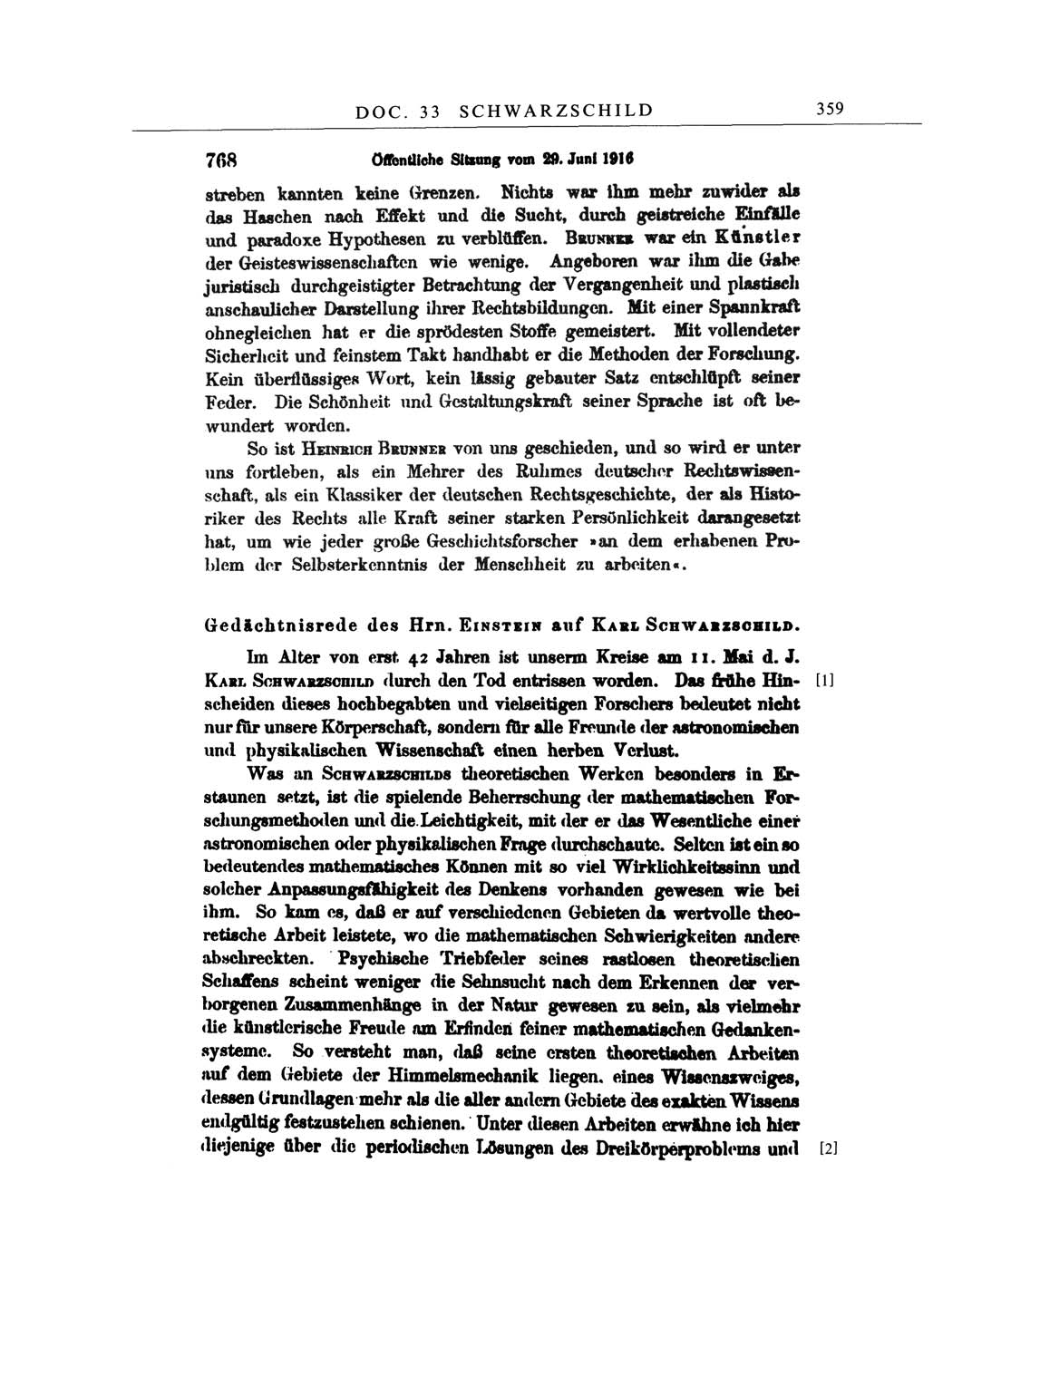 Volume 6: The Berlin Years: Writings, 1914-1917 page 359